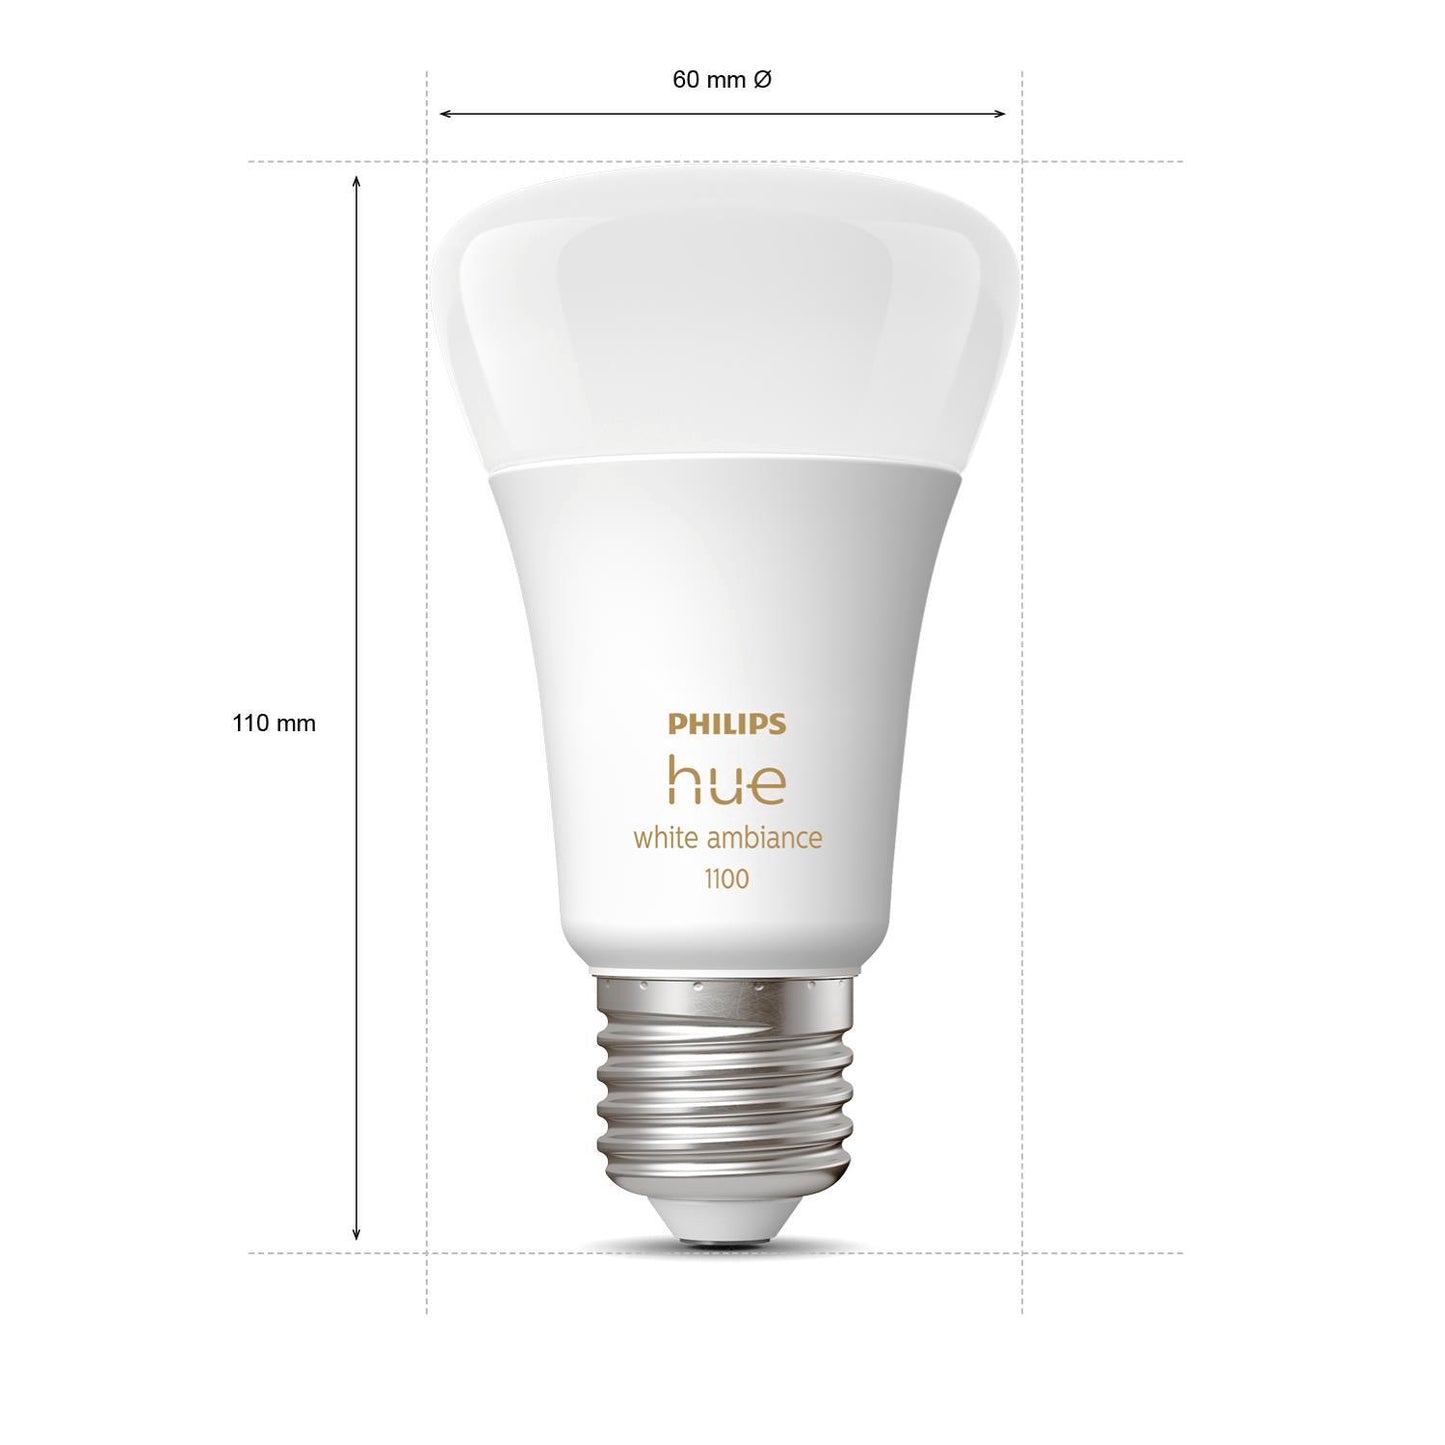 PHILIPS Hue White Ambiance Starter Kit E27 LED Lamp